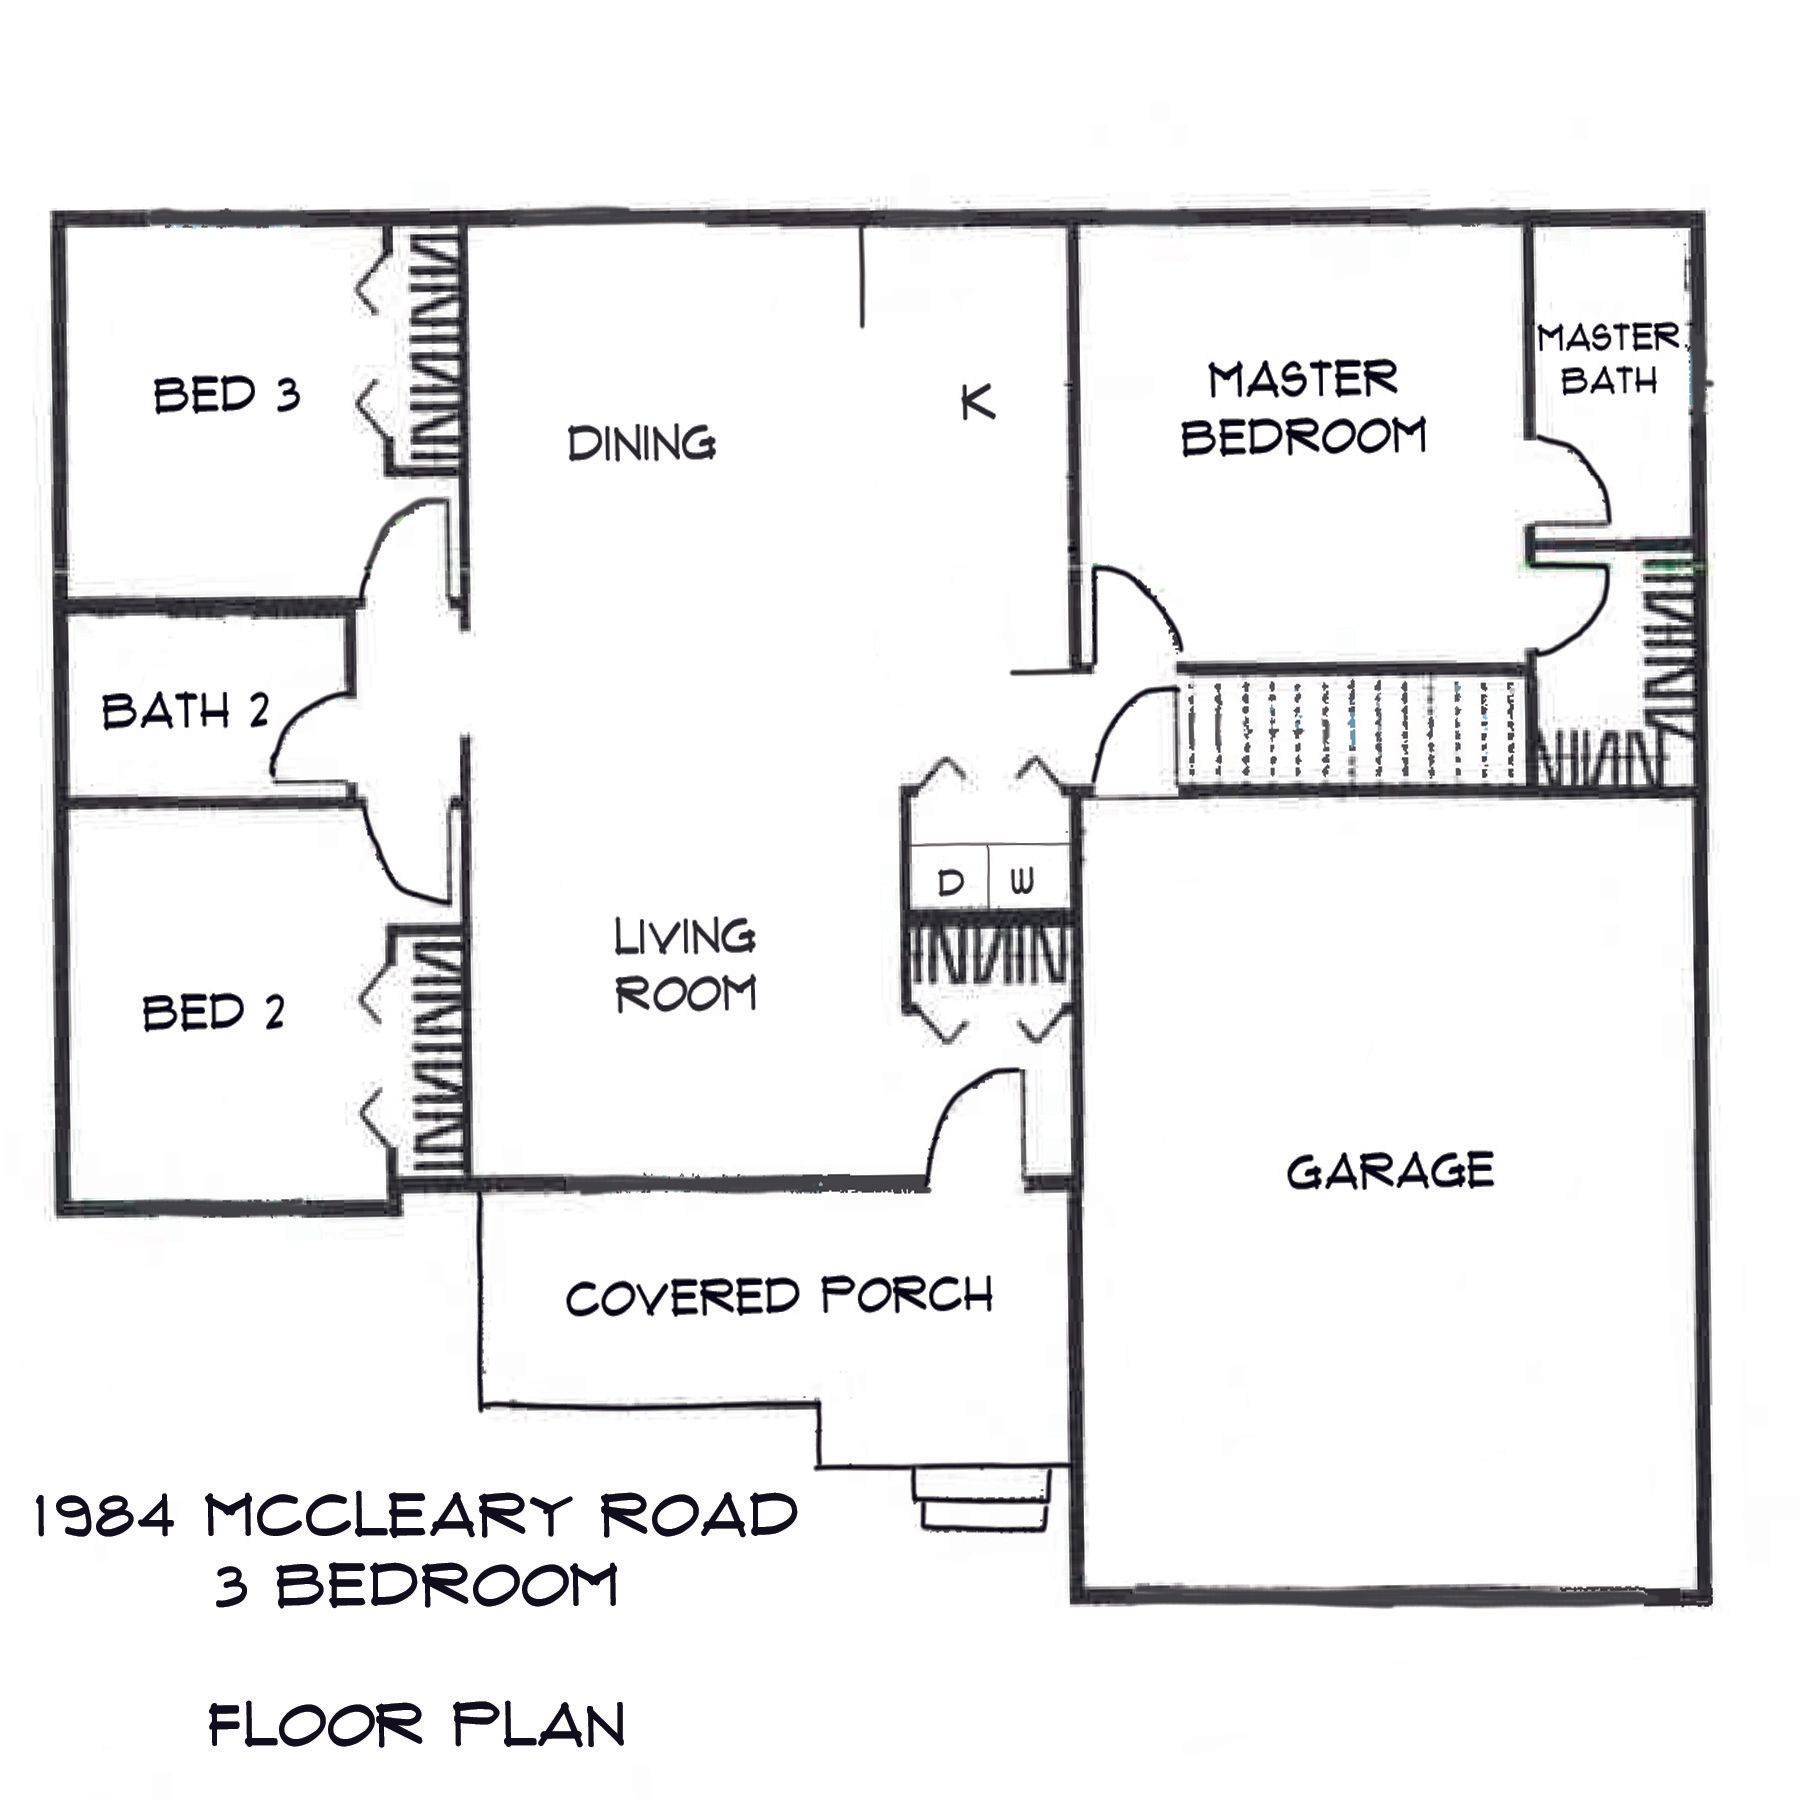 1984 Mccleary Rd floor plan